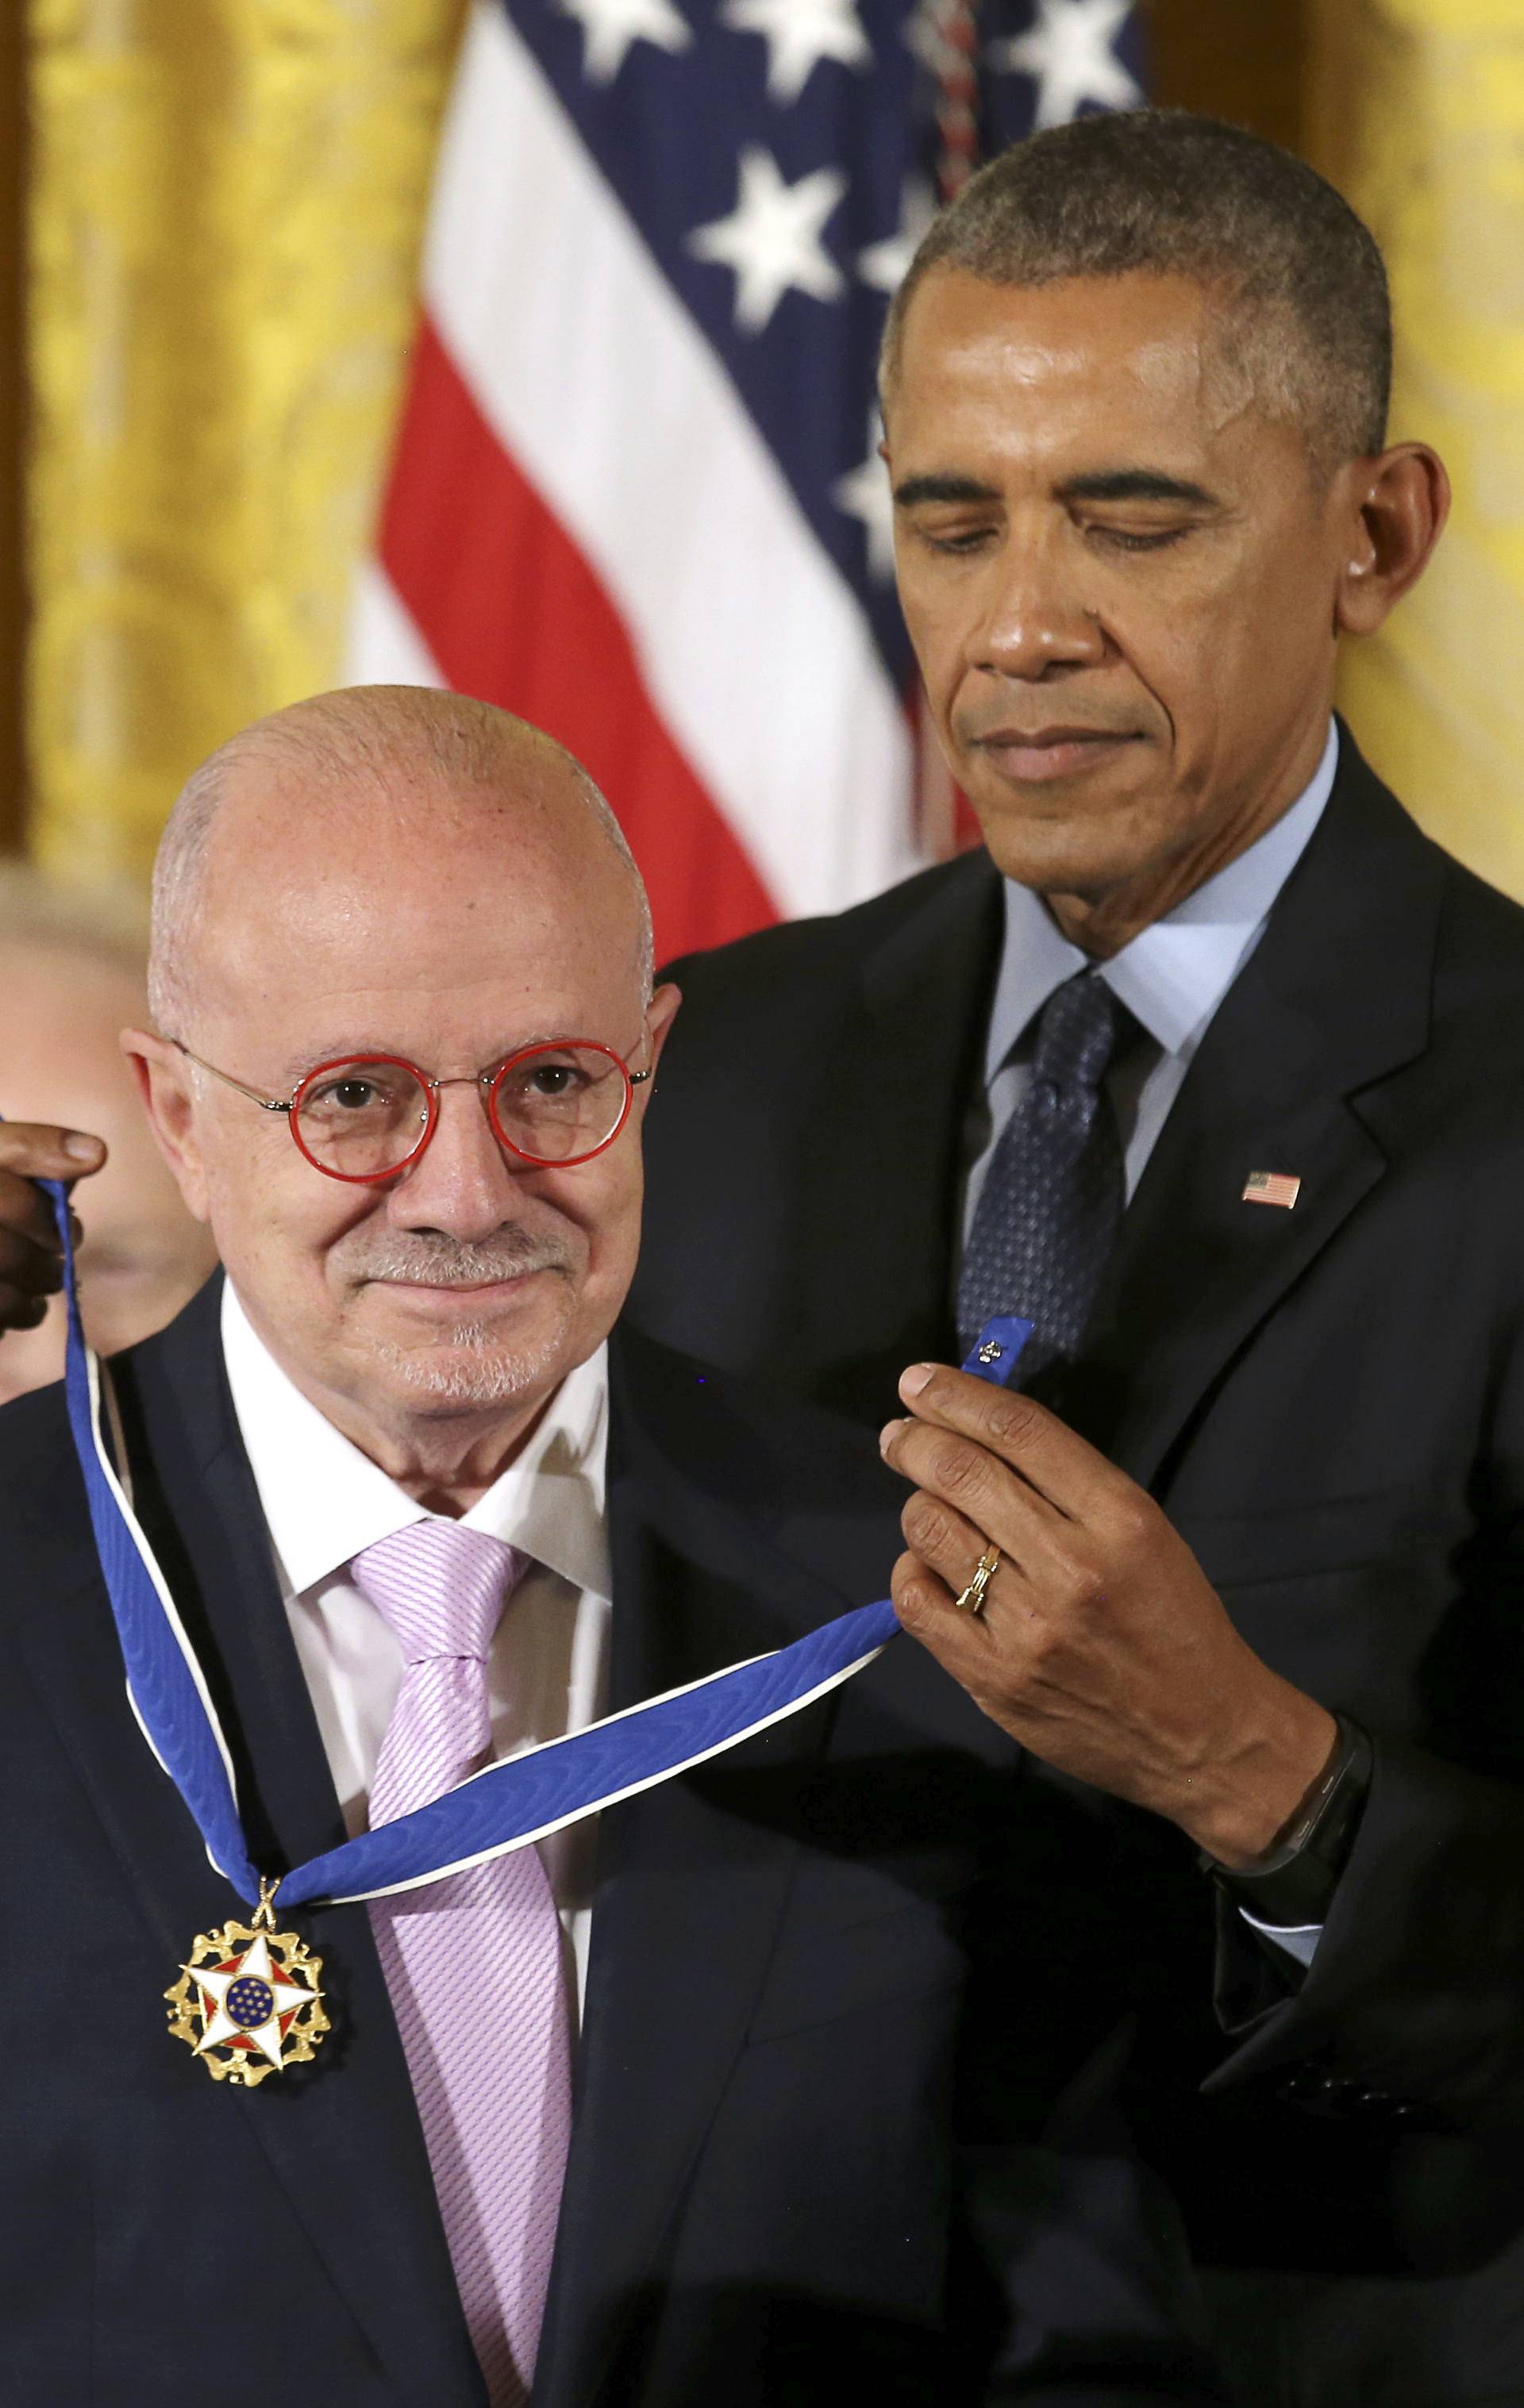 President Obama puts Presidential Medal of Freedom on Miami Dade College president Padron at White House in Washington